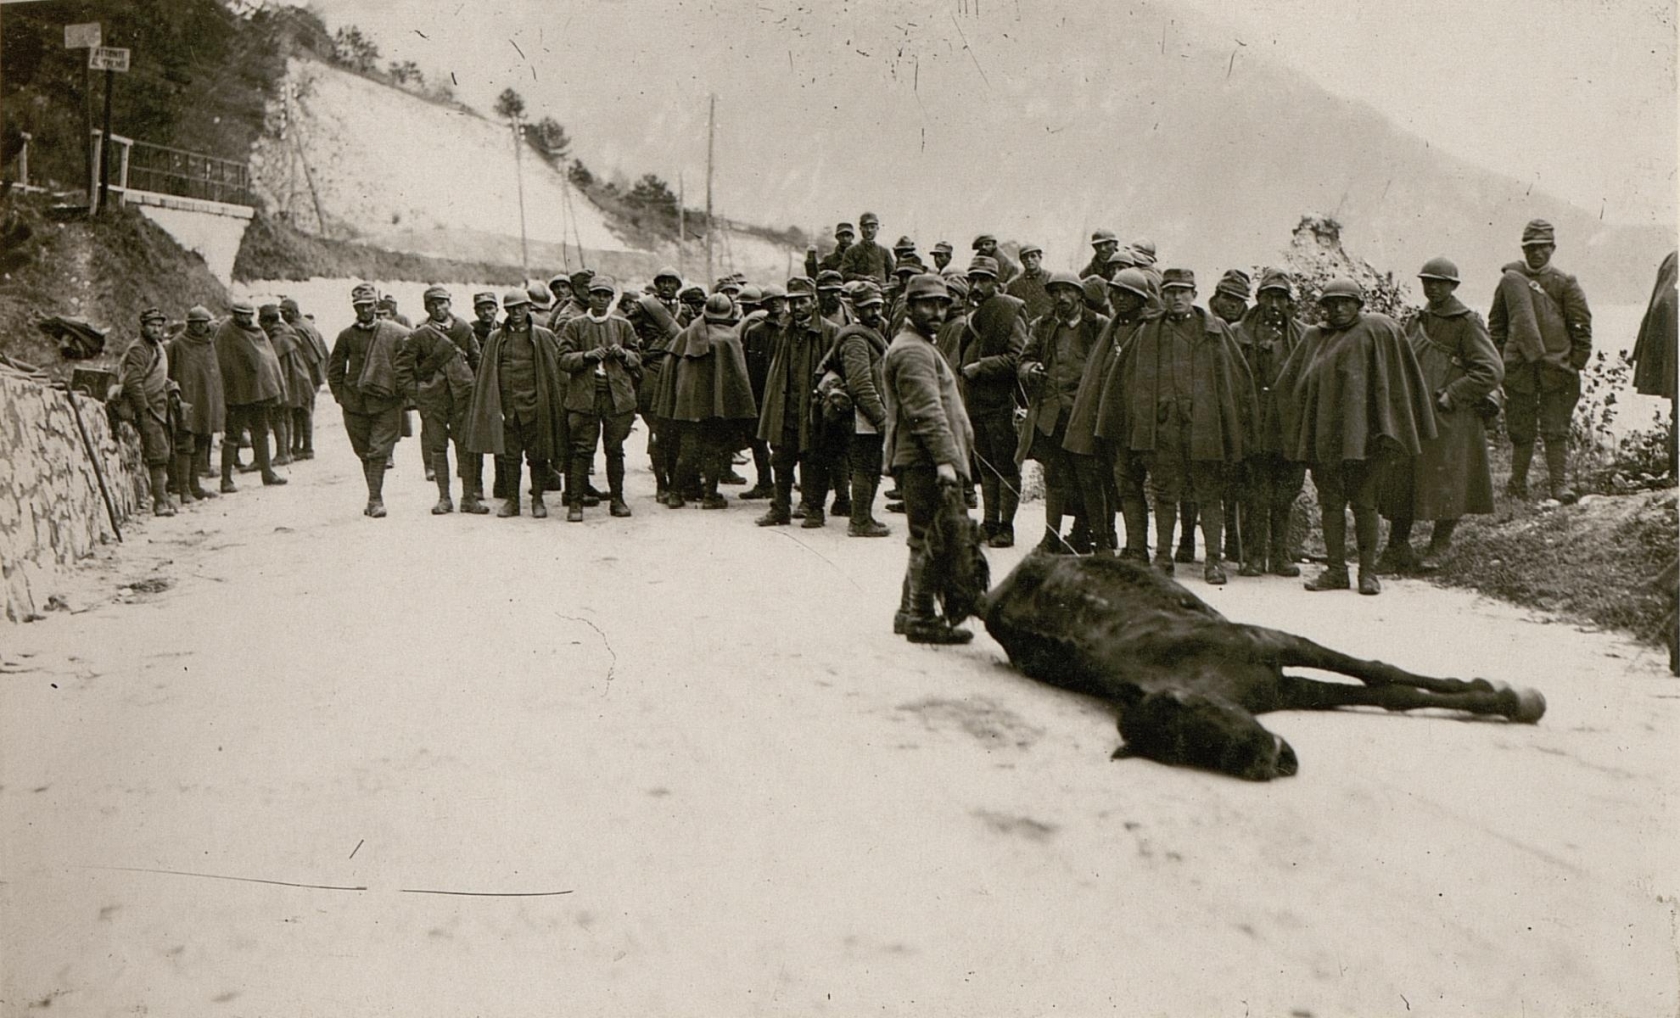 Italian prisoners burying horses. 8 November 1917 (Österreichische Nationalbibliothek)